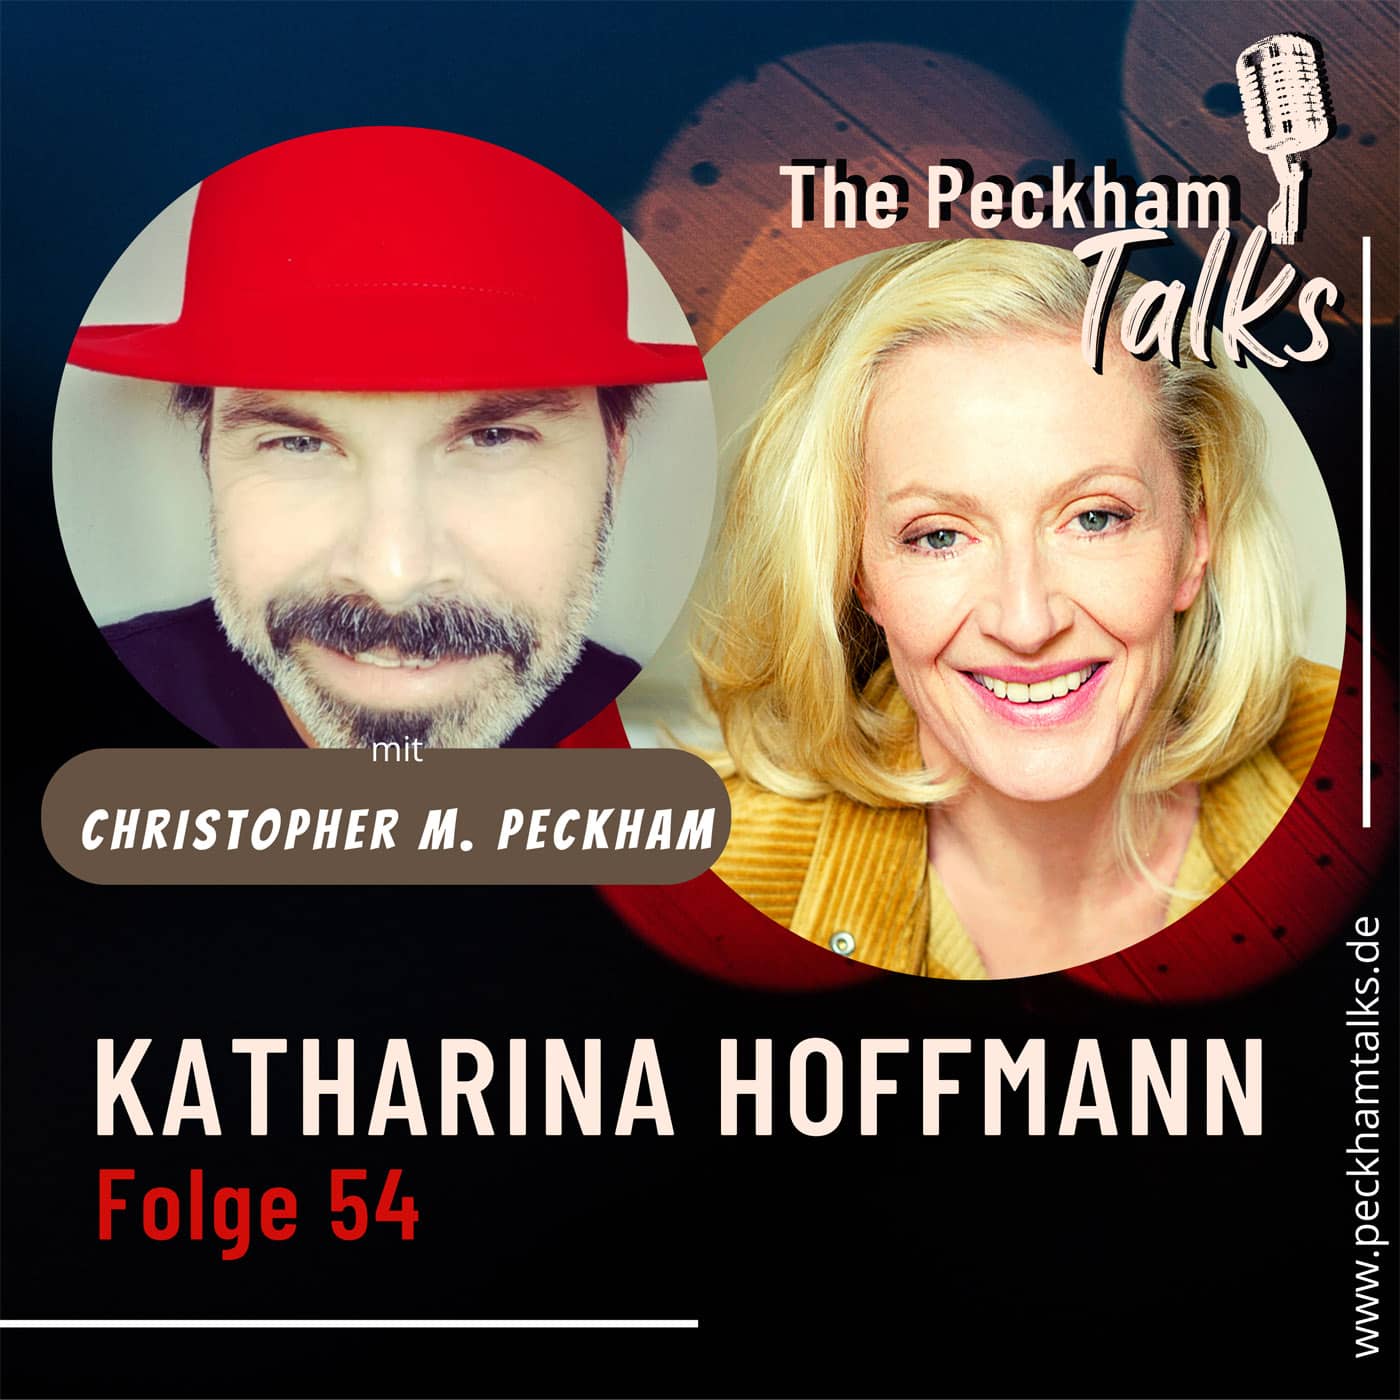 Katharina Hoffmann: Kabarettistin, Retro Feministin & Geile Biene